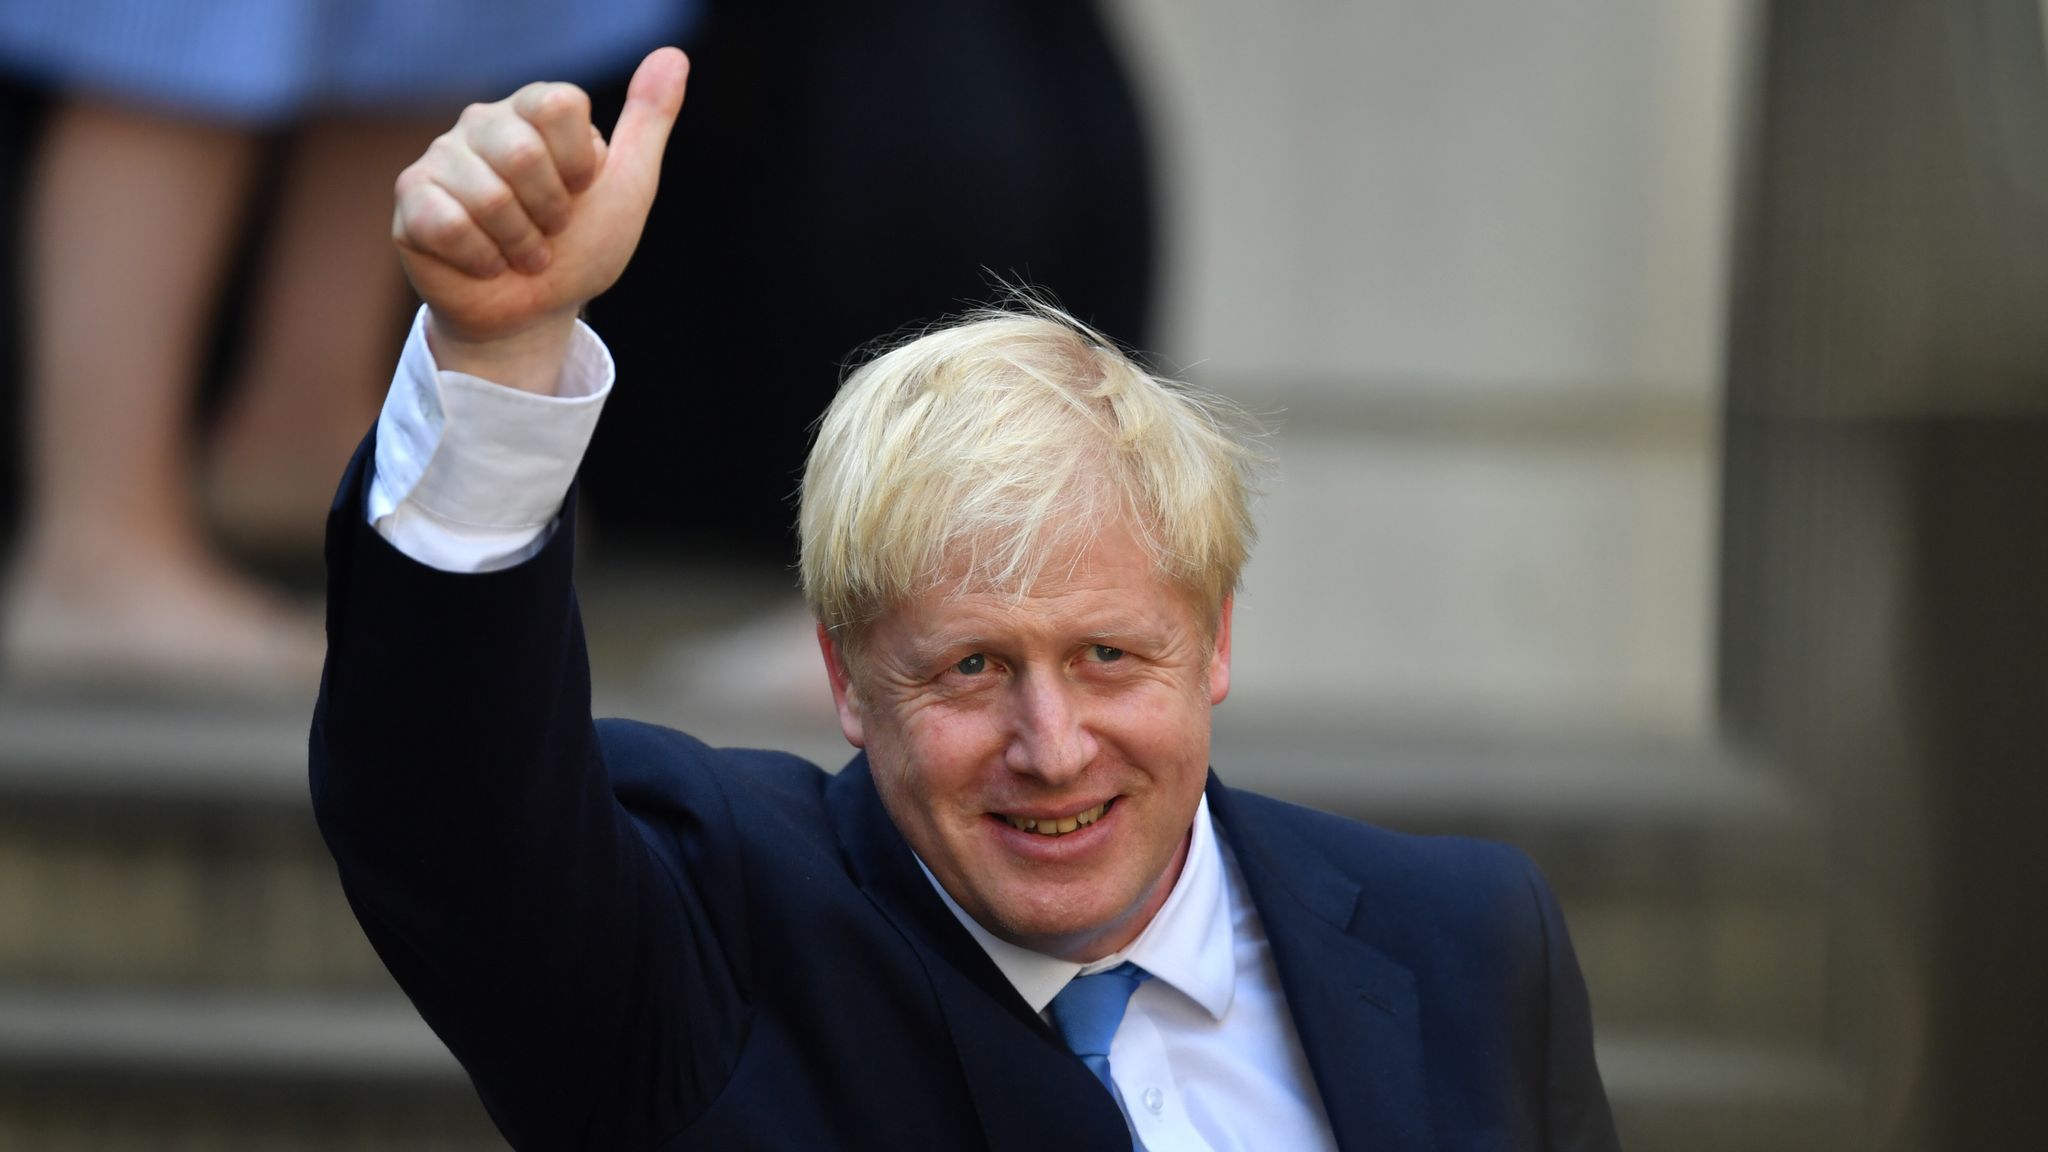 Prime Minister Boris Johnson to visit India next month